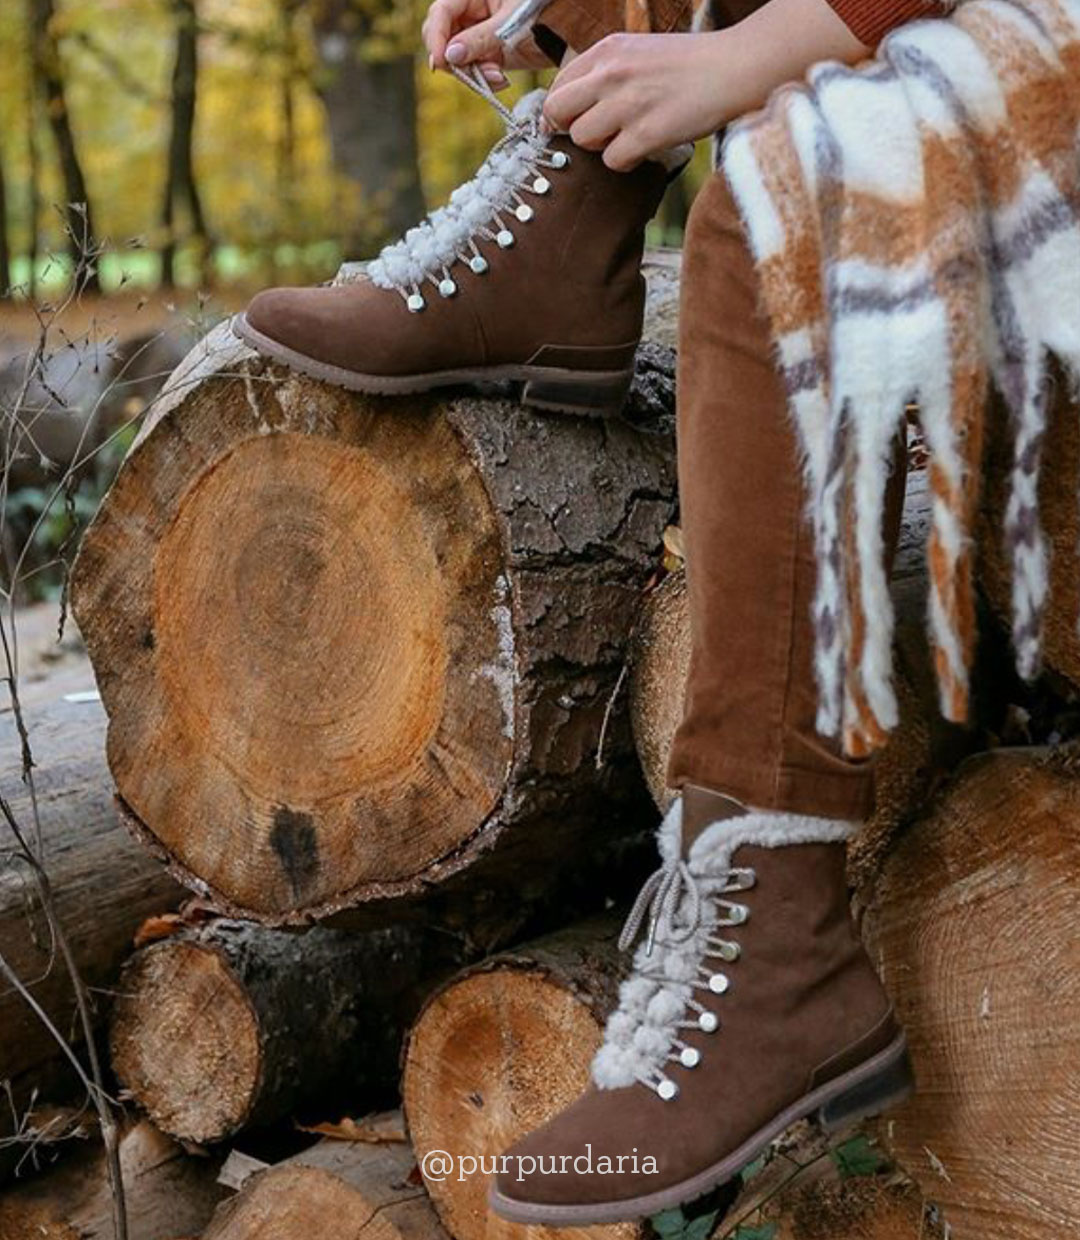 Woman wearing Billington hiking-style boot sitting on log outdoors